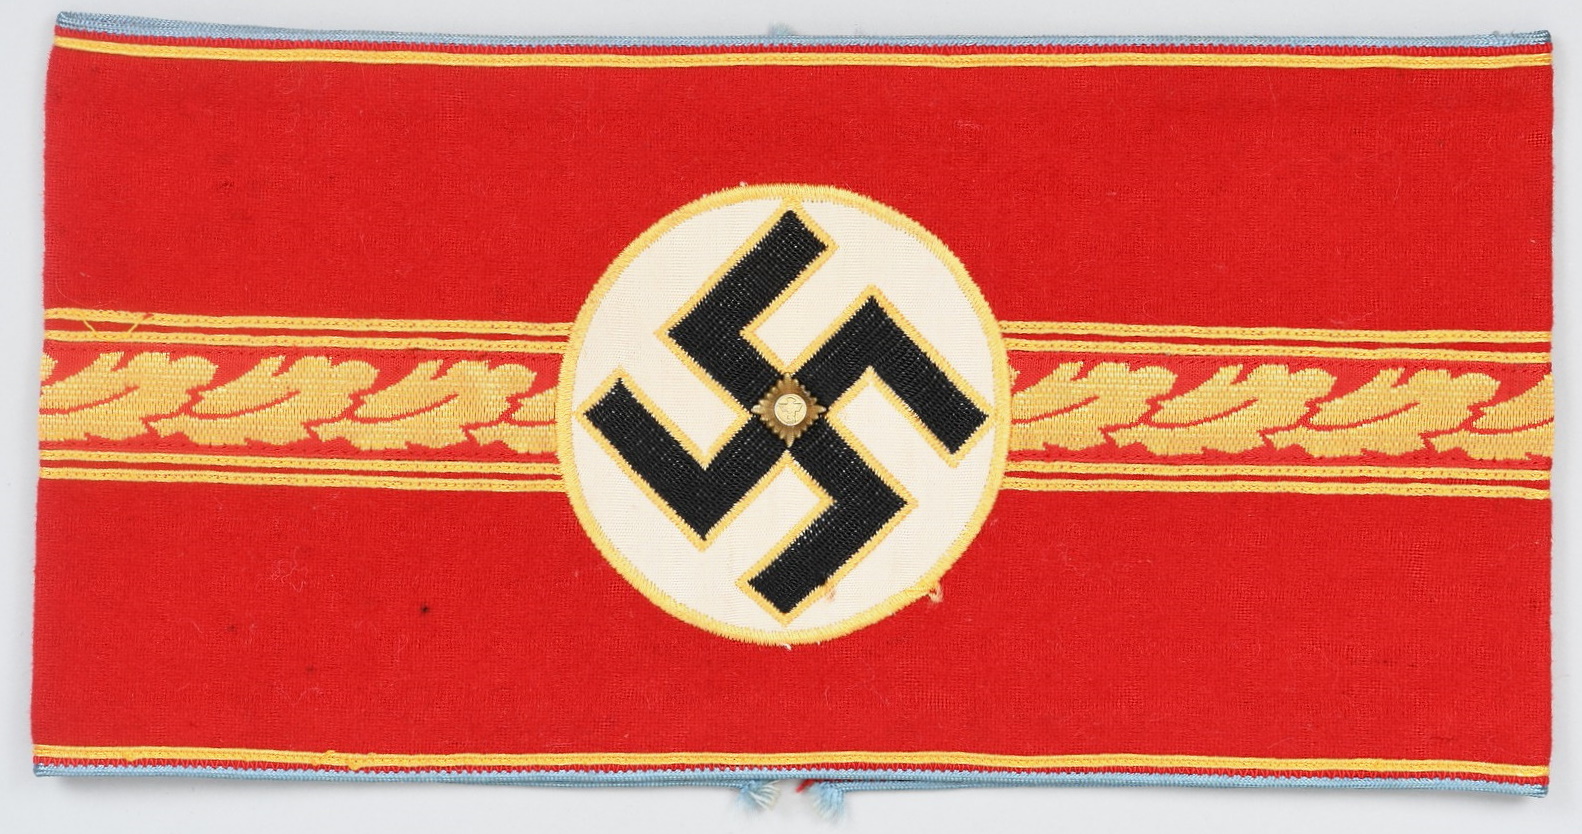 NSDAP Ortsgruppenleiter Armband